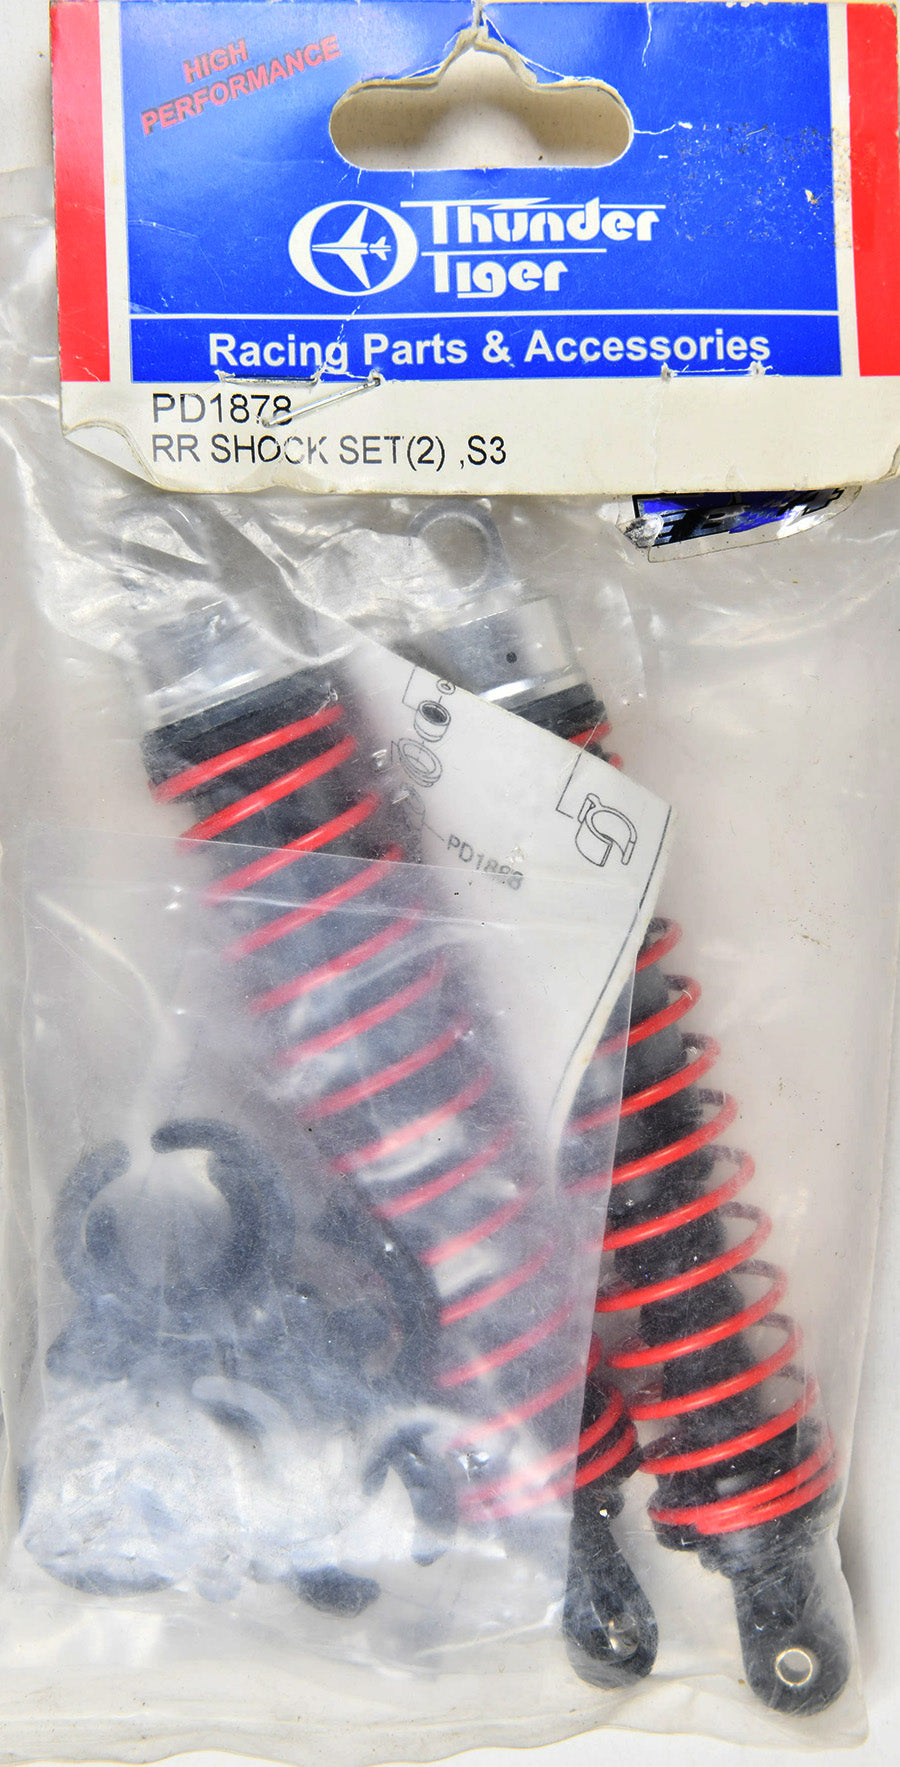 Thunder Tiger PD1878 Rear Shock Set (2) S3 TTRPD1878